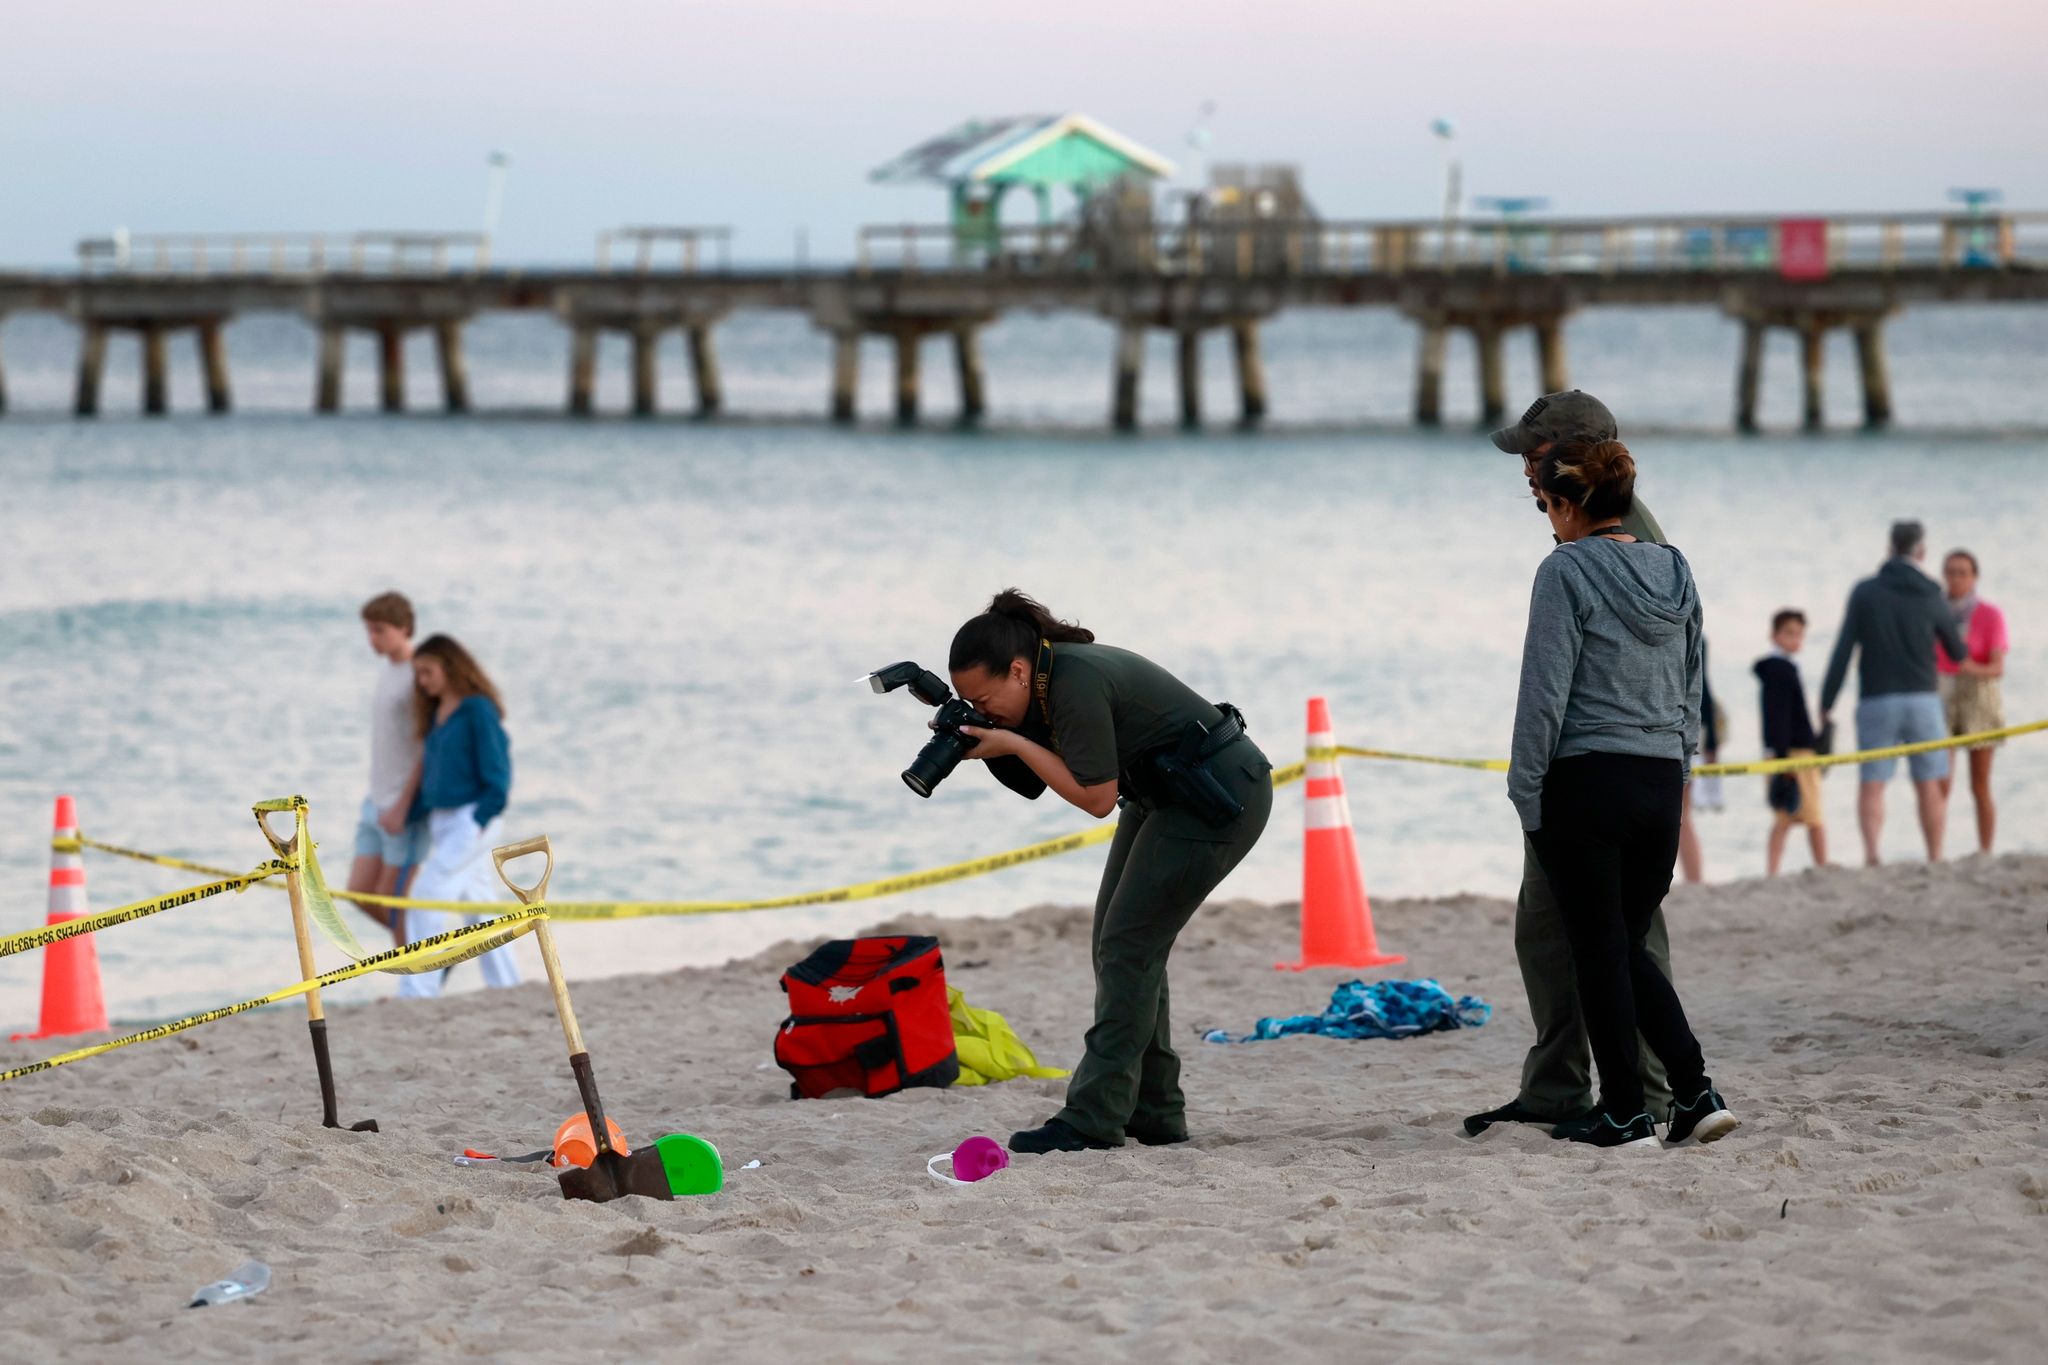 Beim Buddeln am Strand begraben: Kind tot